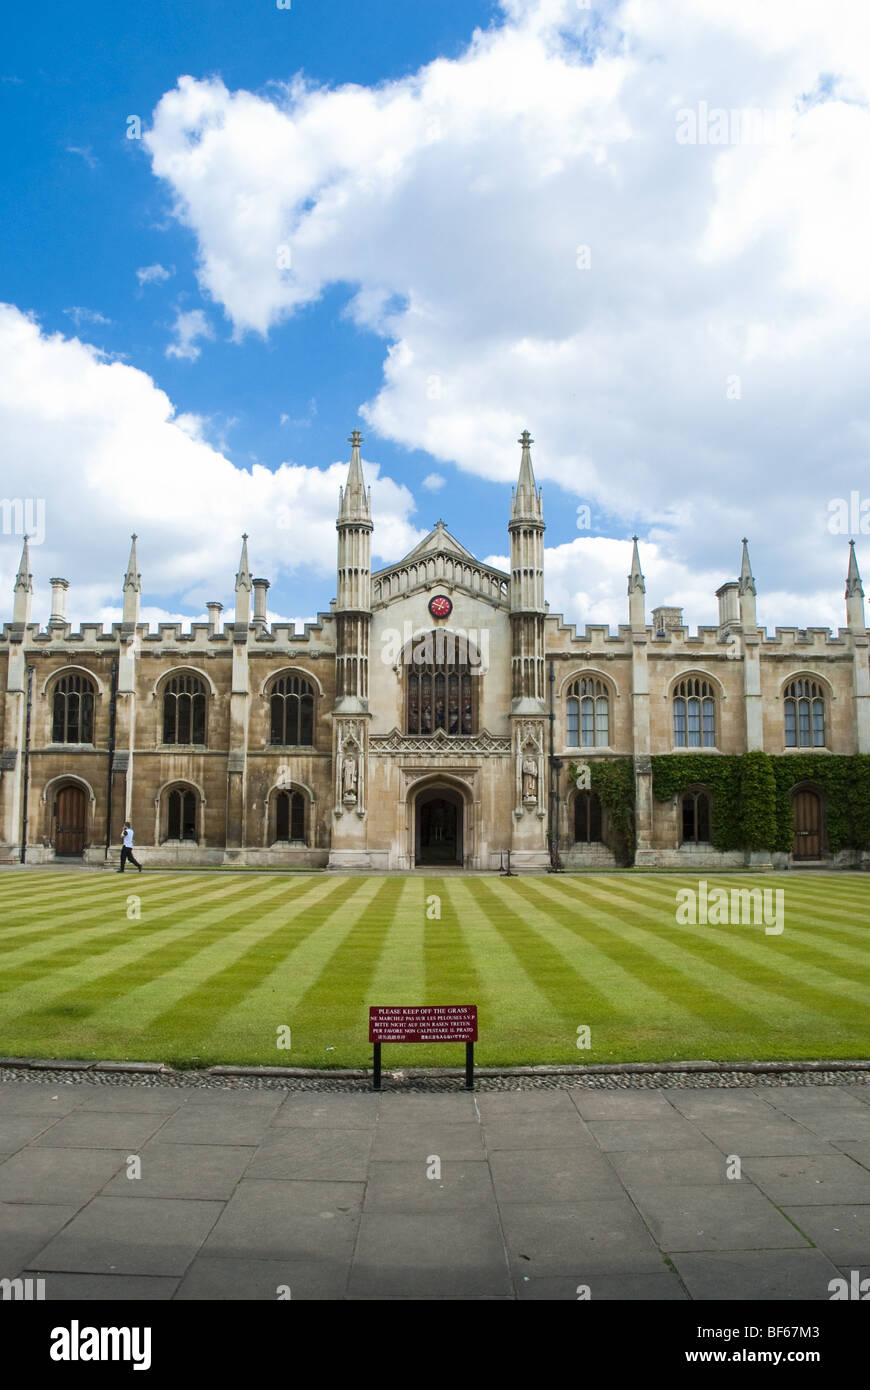 The courtyard of Queen's College in Cambridge, UK. Stock Photo